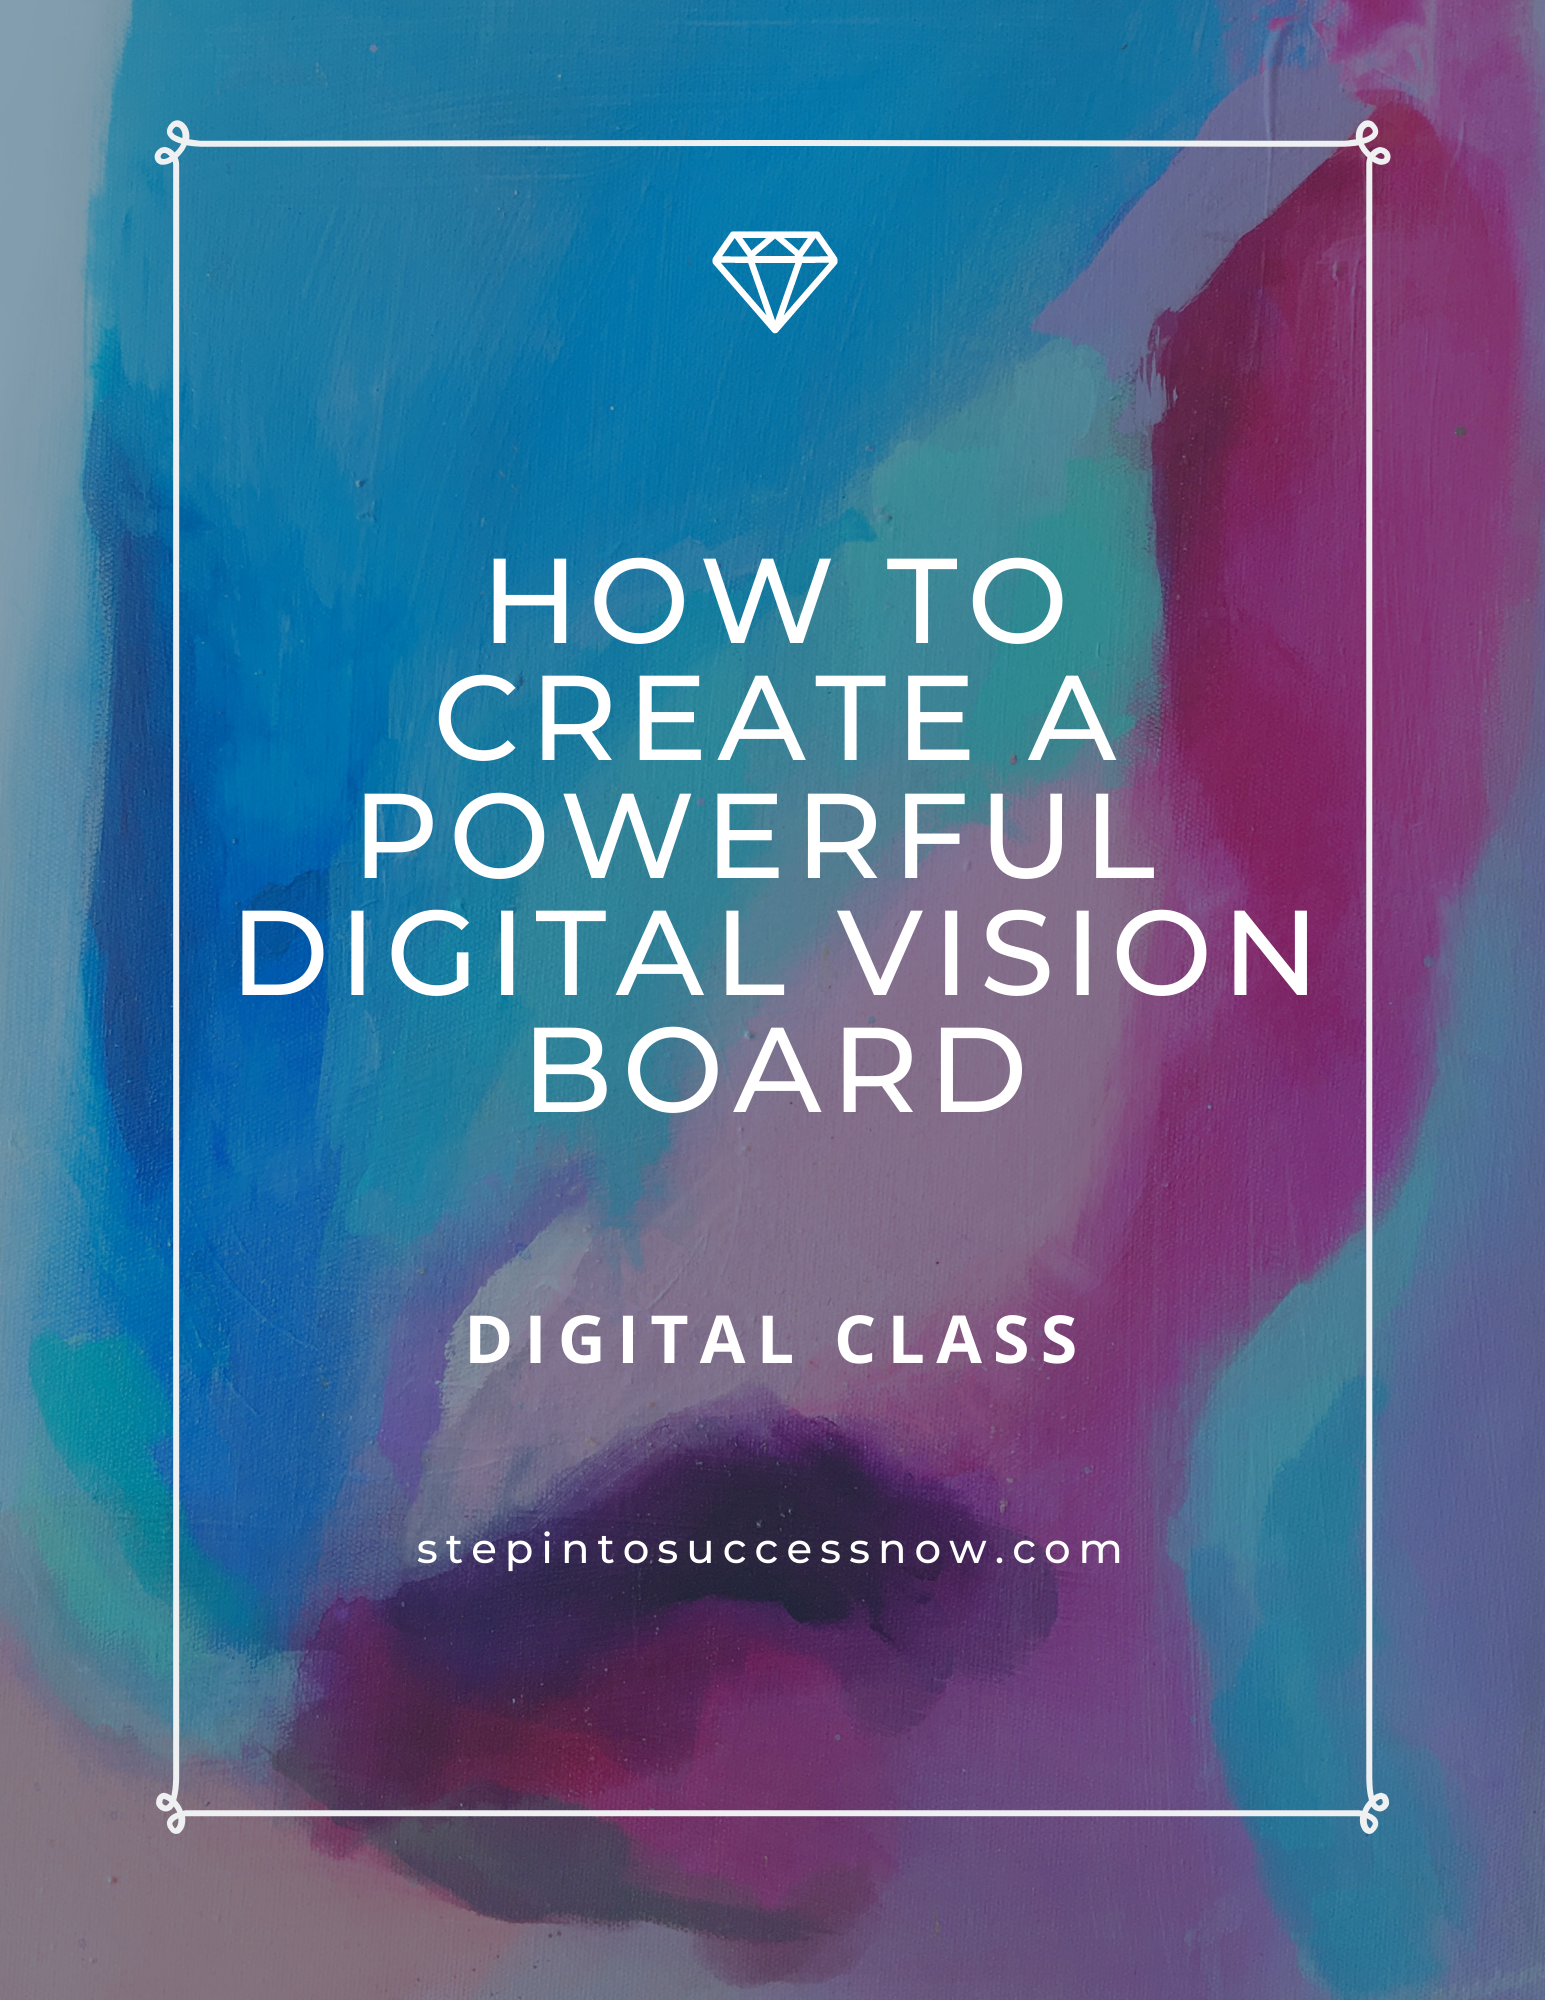 Digital New Years Vision Board by Sweetnsauerfirsties